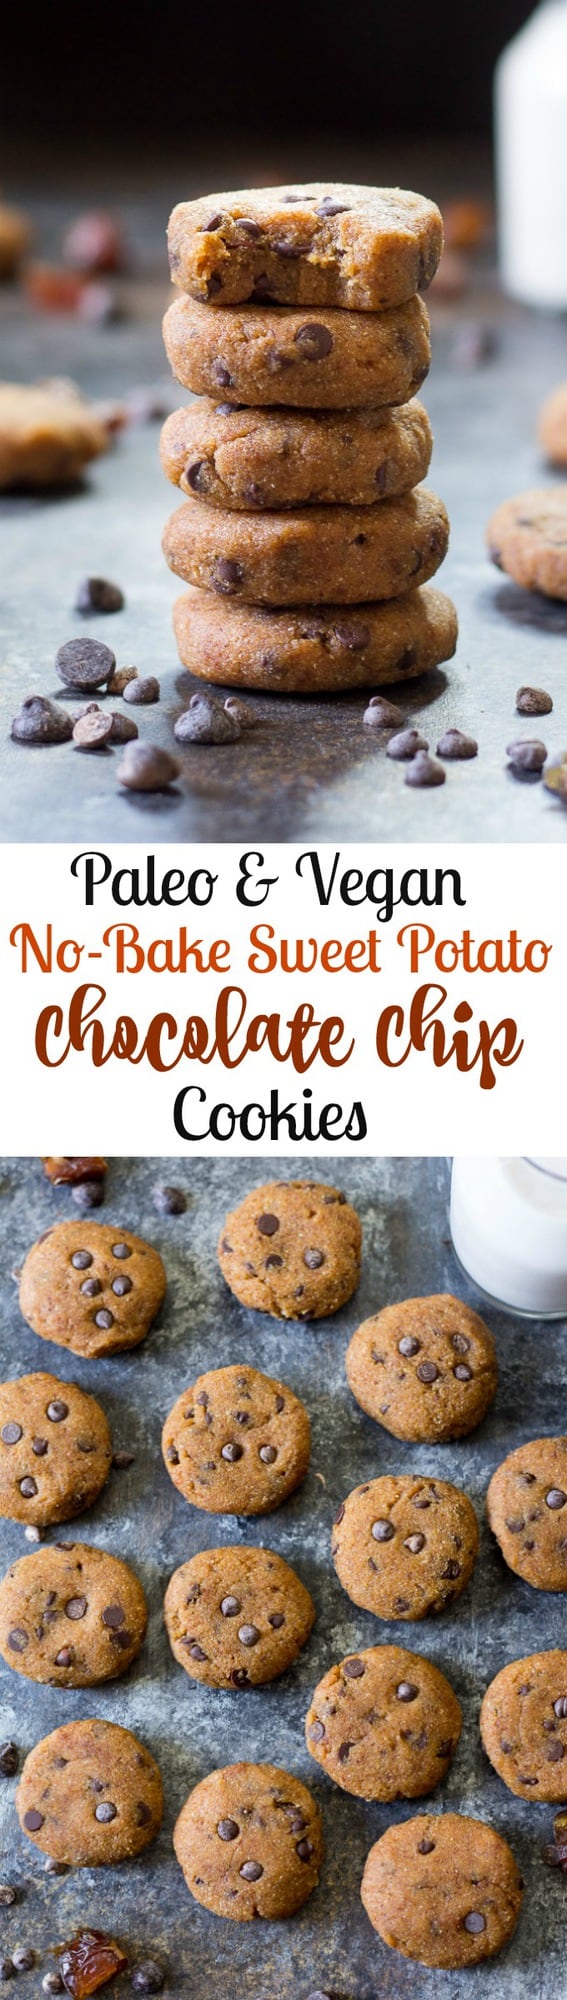 paleo-and-vegan-no-bake-sweet-potato-chocolate-chip-cookies